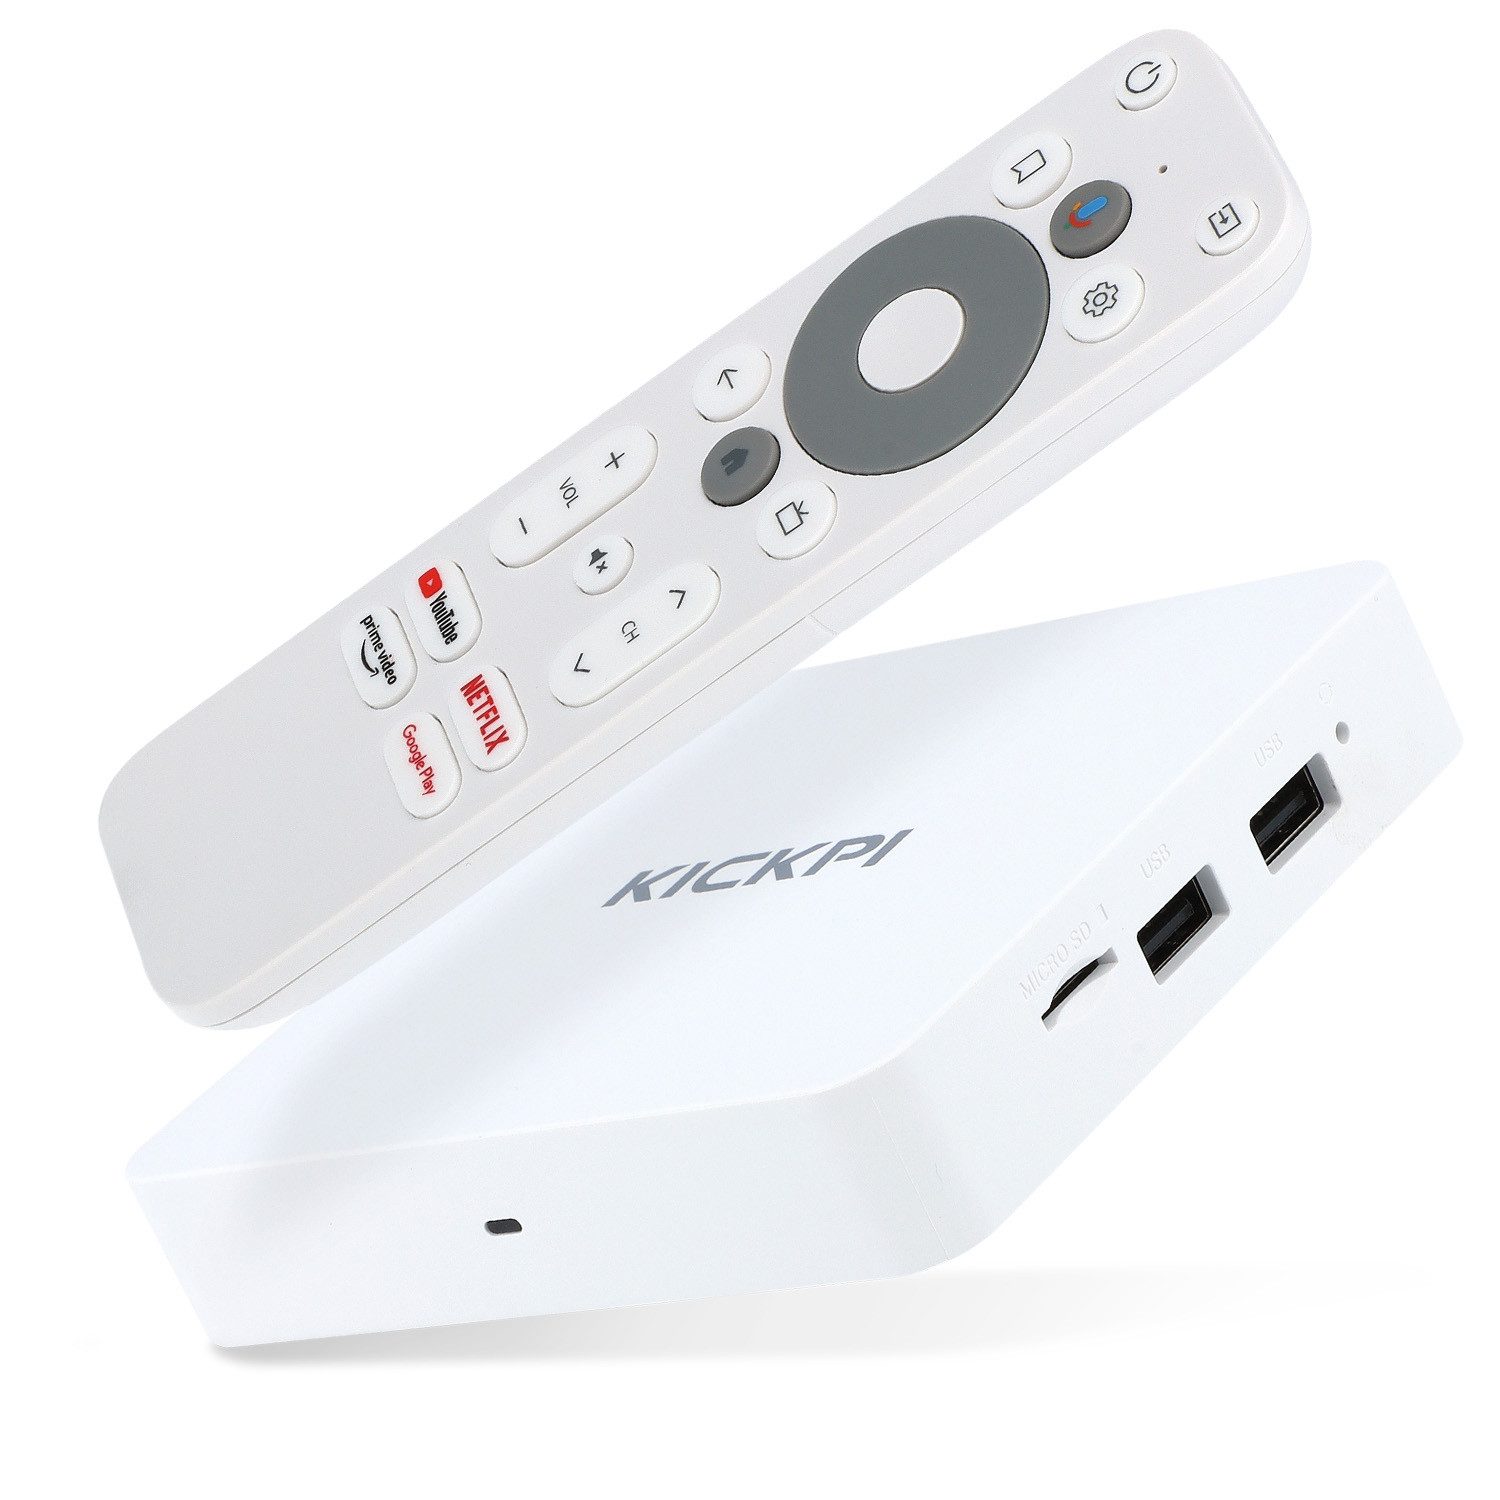 Zehnder Streaming-Box KP-1, IPTV, Android 11, 4K, UHD, Netflix, Prime Video, YouTube, Google Play,WiFi WLAN